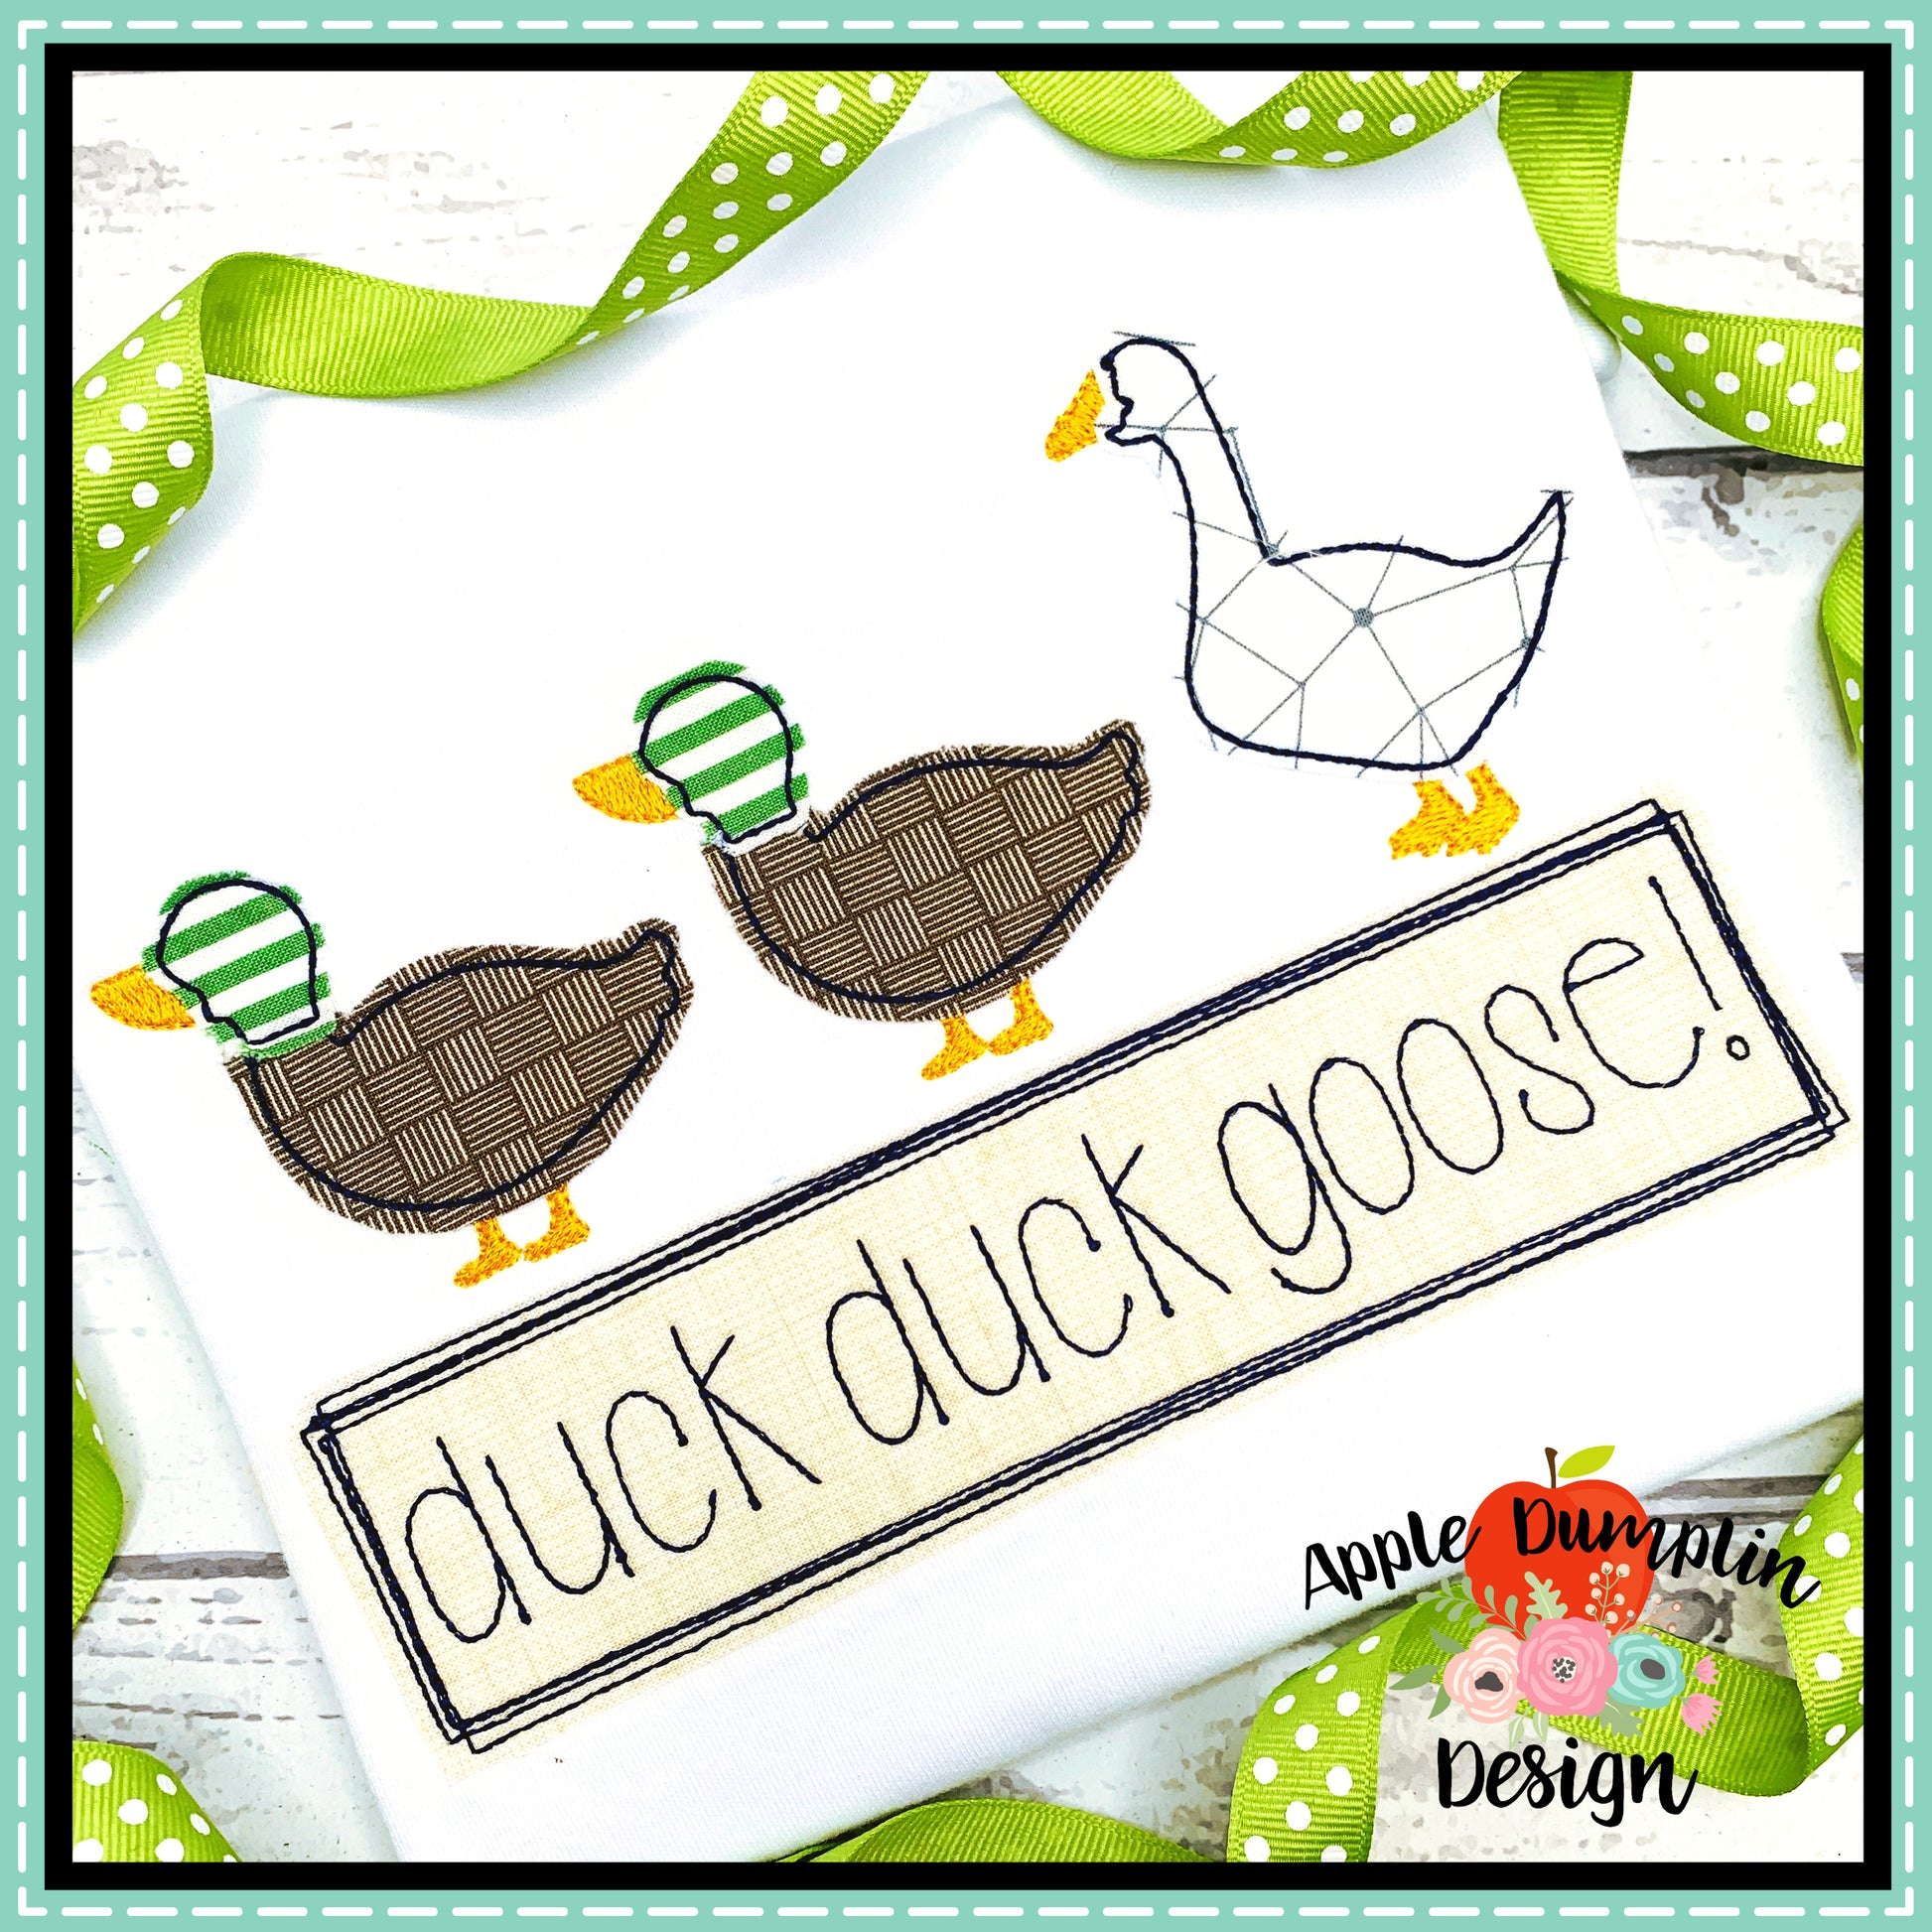 Duck Duck Goose Bean Stitch Applique Design, applique